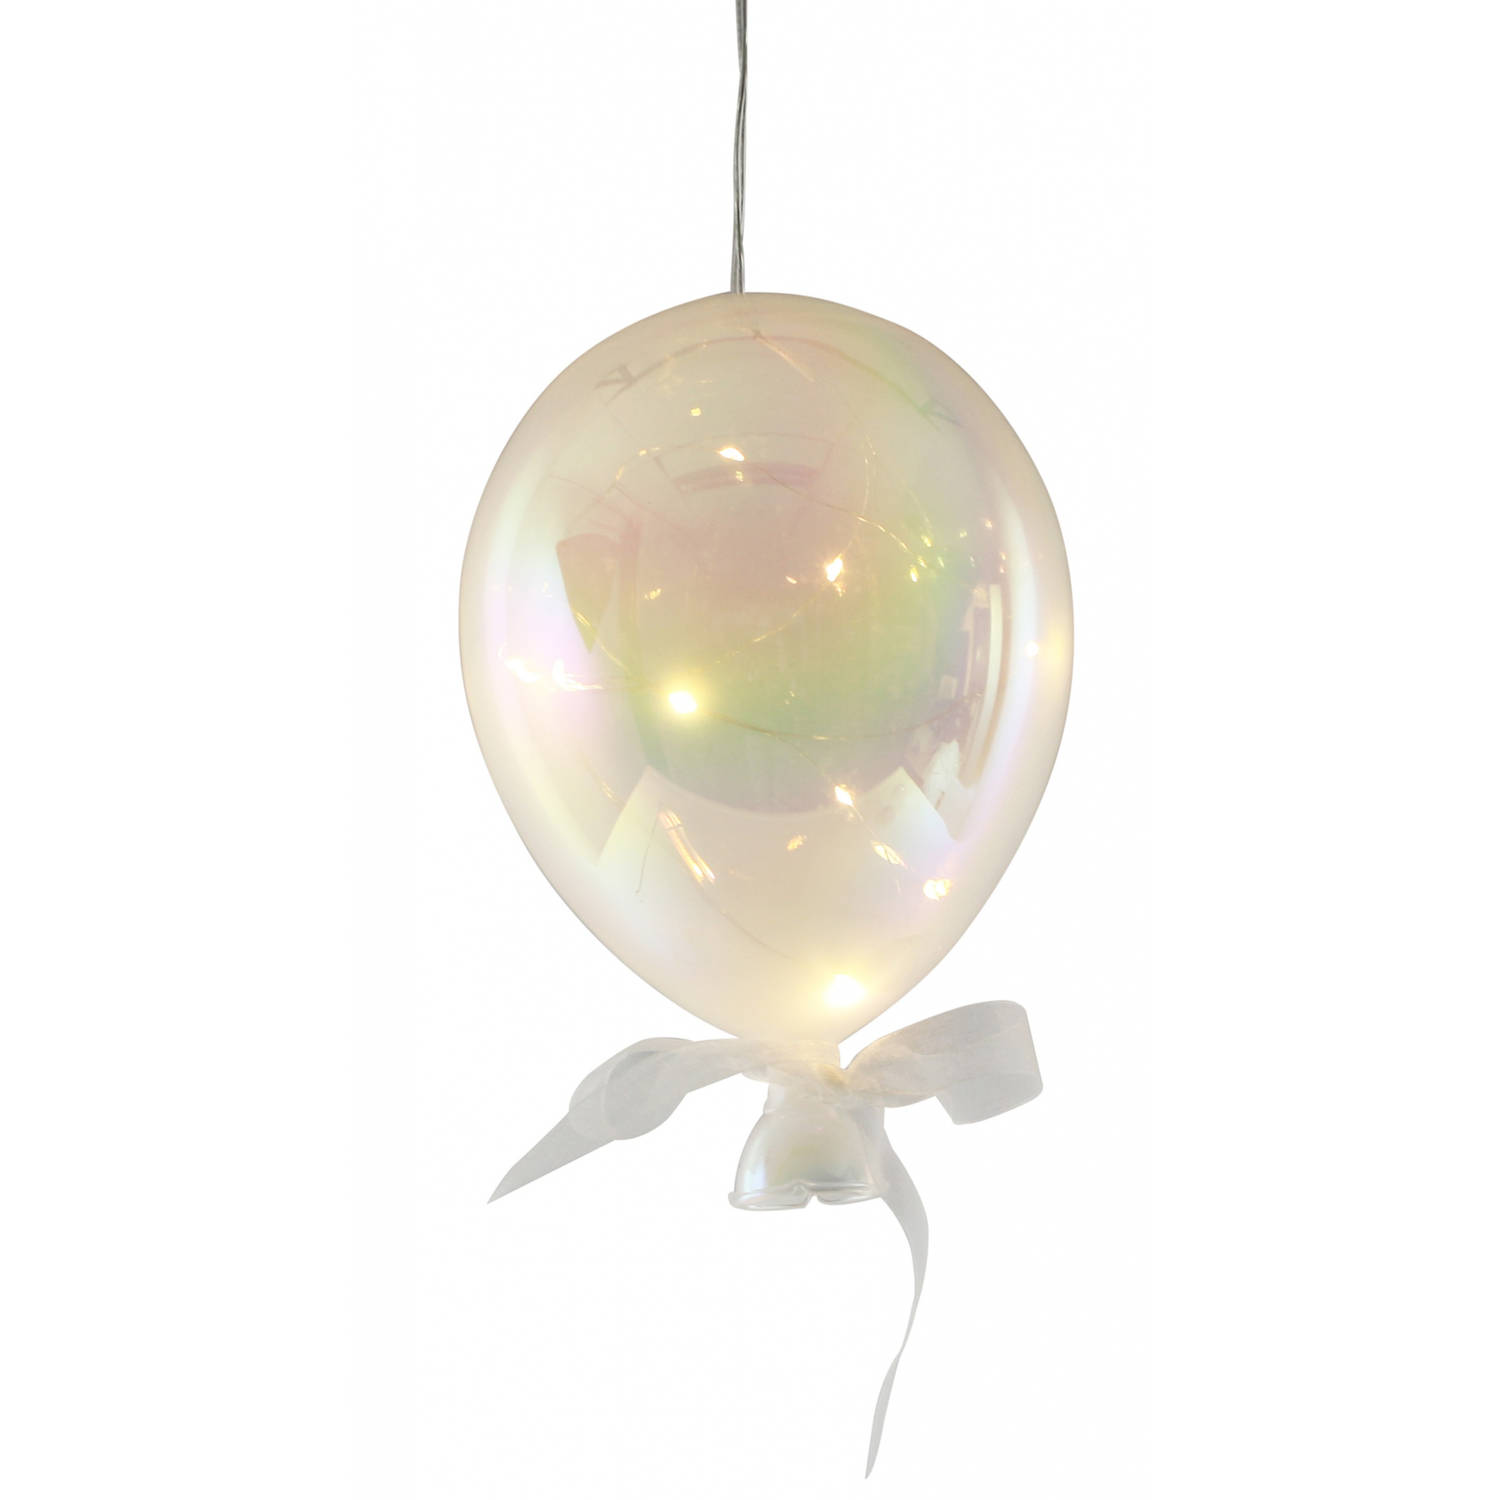 Peha kerstboomhanger Ballon led 13 x 20 cm glas transparant